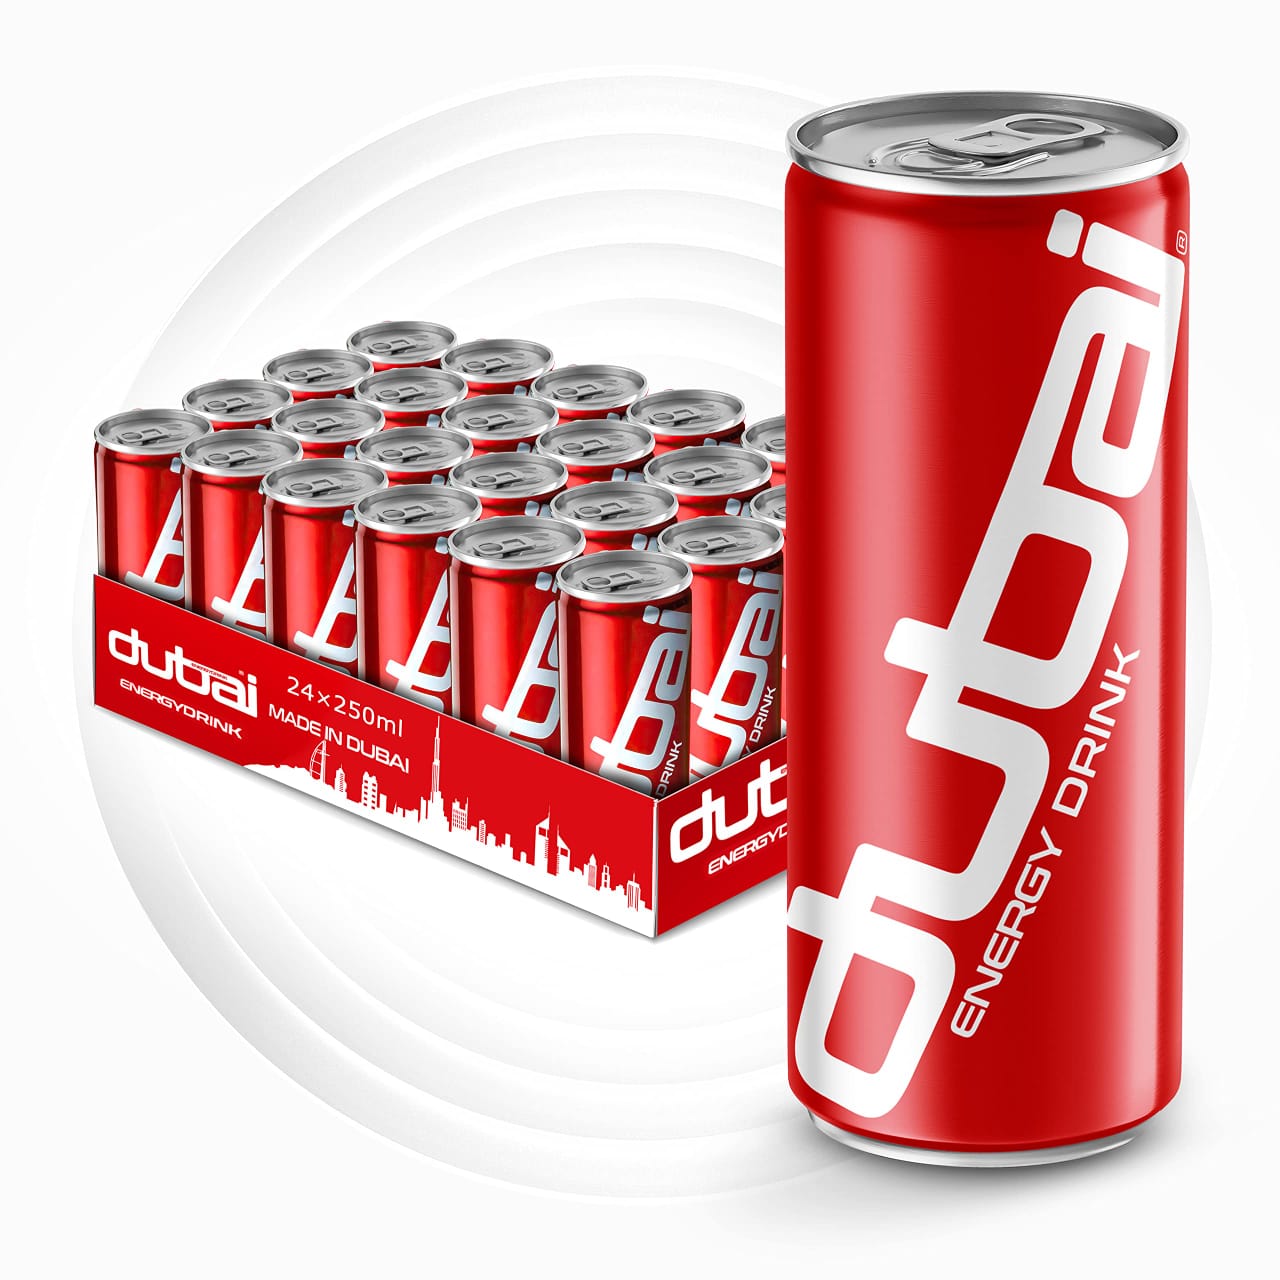 Dubai Energy Drink (Original Flavor) 24 pack